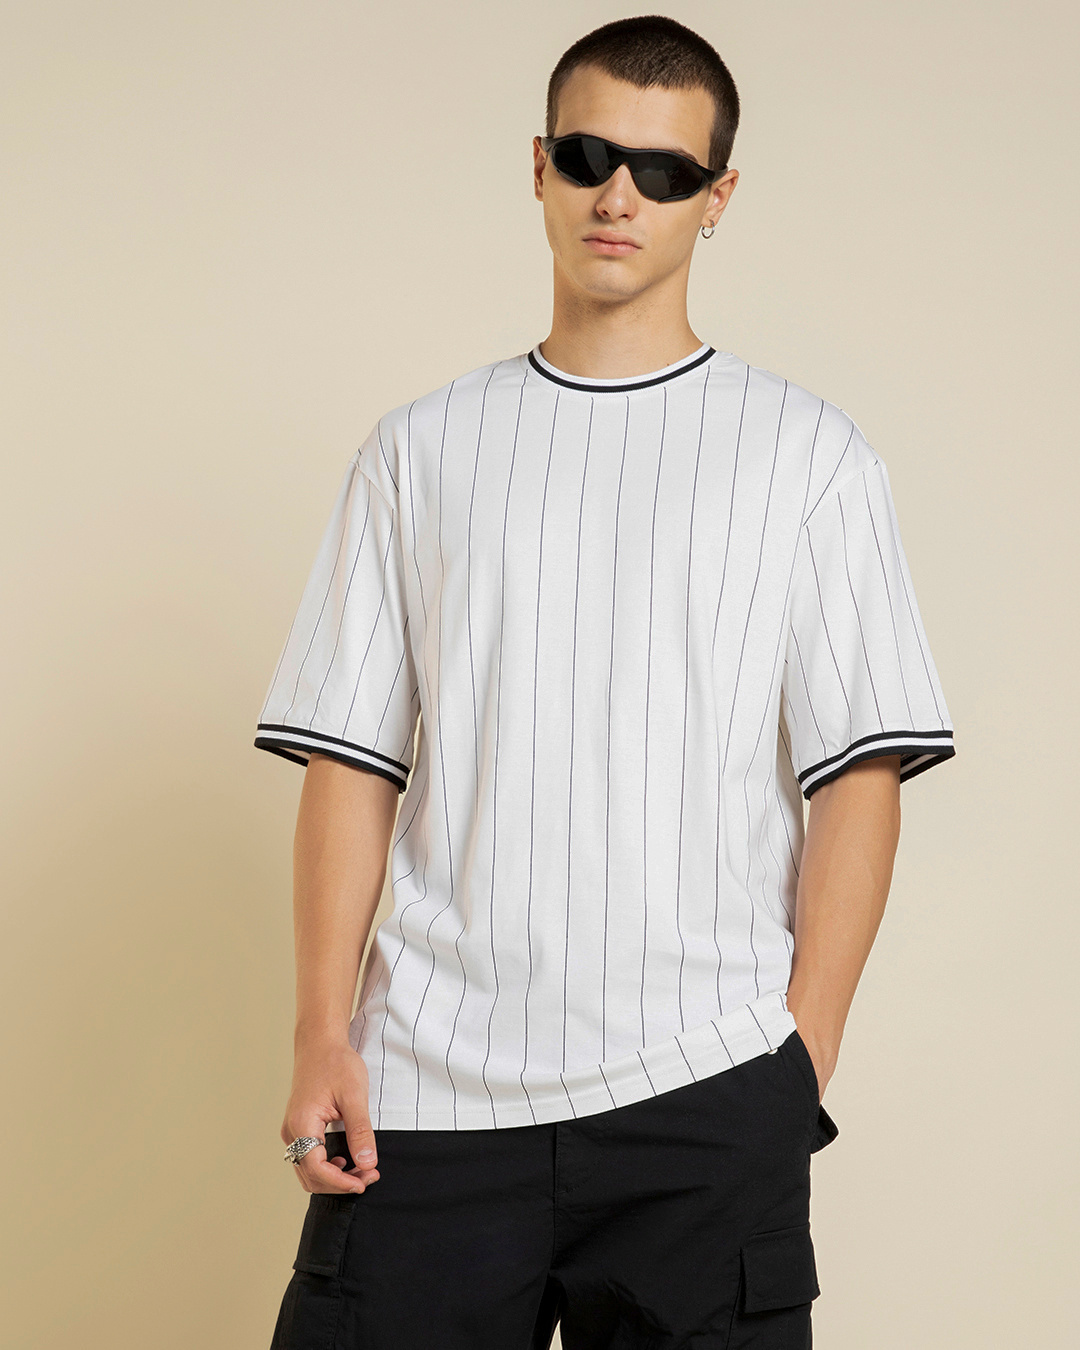 Buy Men's White Striped Oversized T-shirt Online at Bewakoof